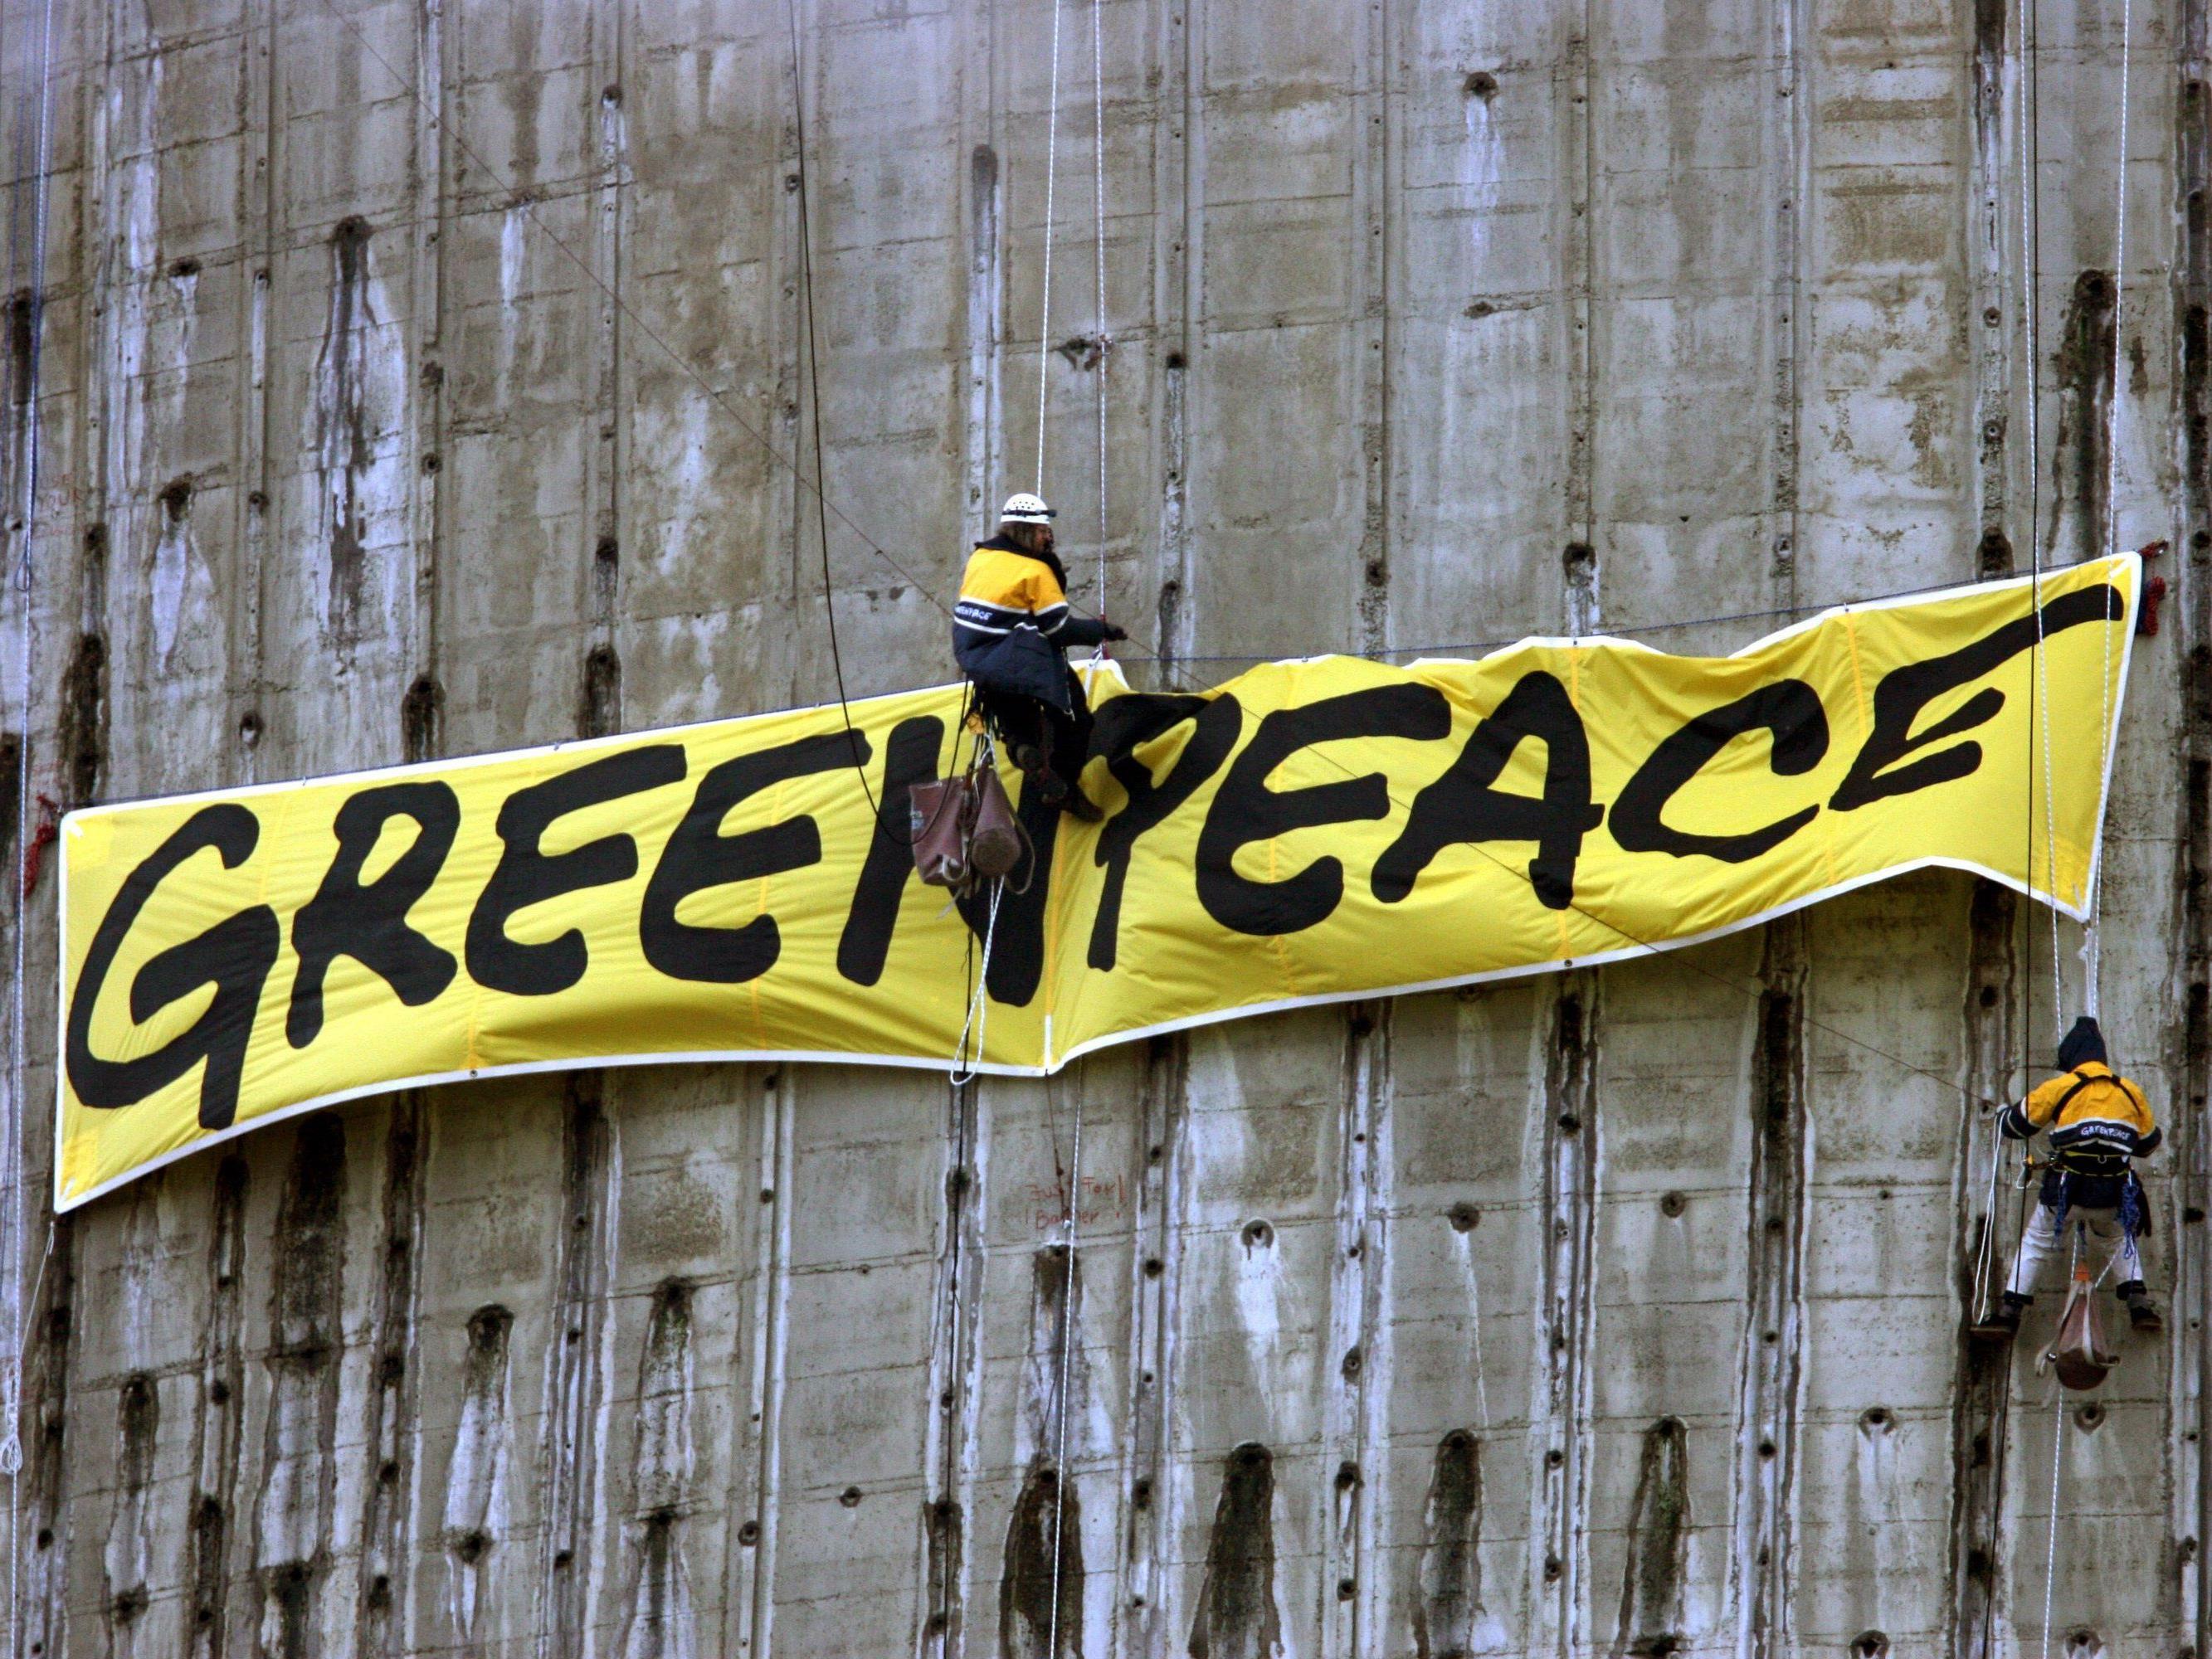 Greenpeace forder strengere Reglementierungen in Asien.